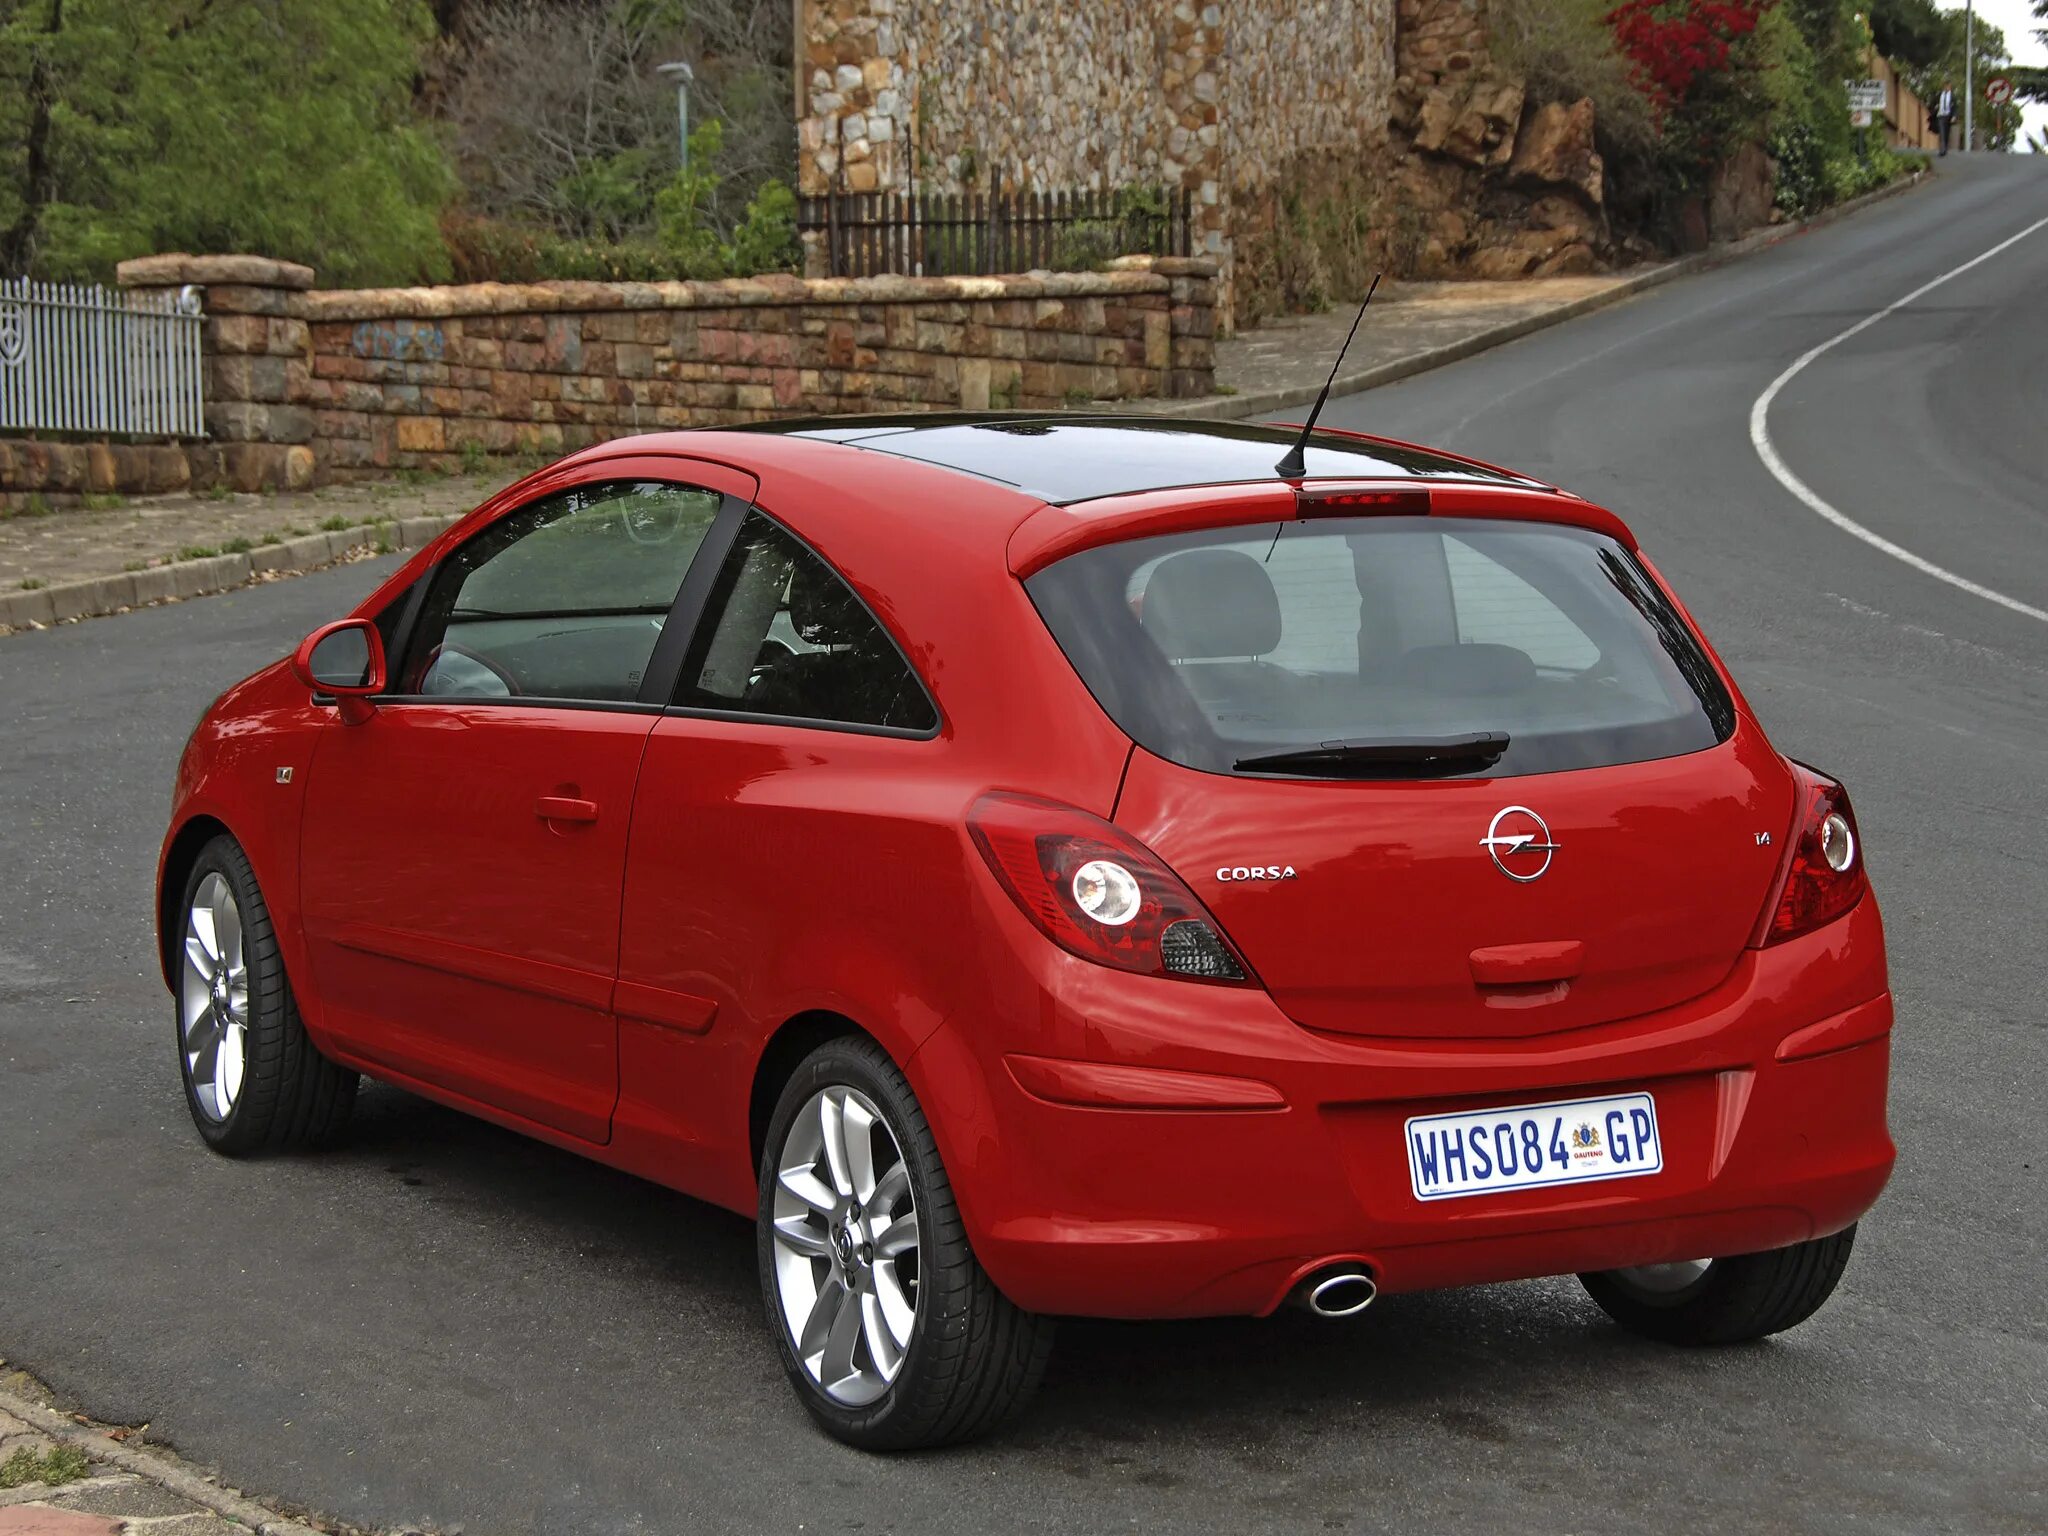 Opel Corsa 3. Opel Corsa 3 двери. Опель Корса 2 дверный. Opel Corsa 2009. 2 дверные хэтчбеки